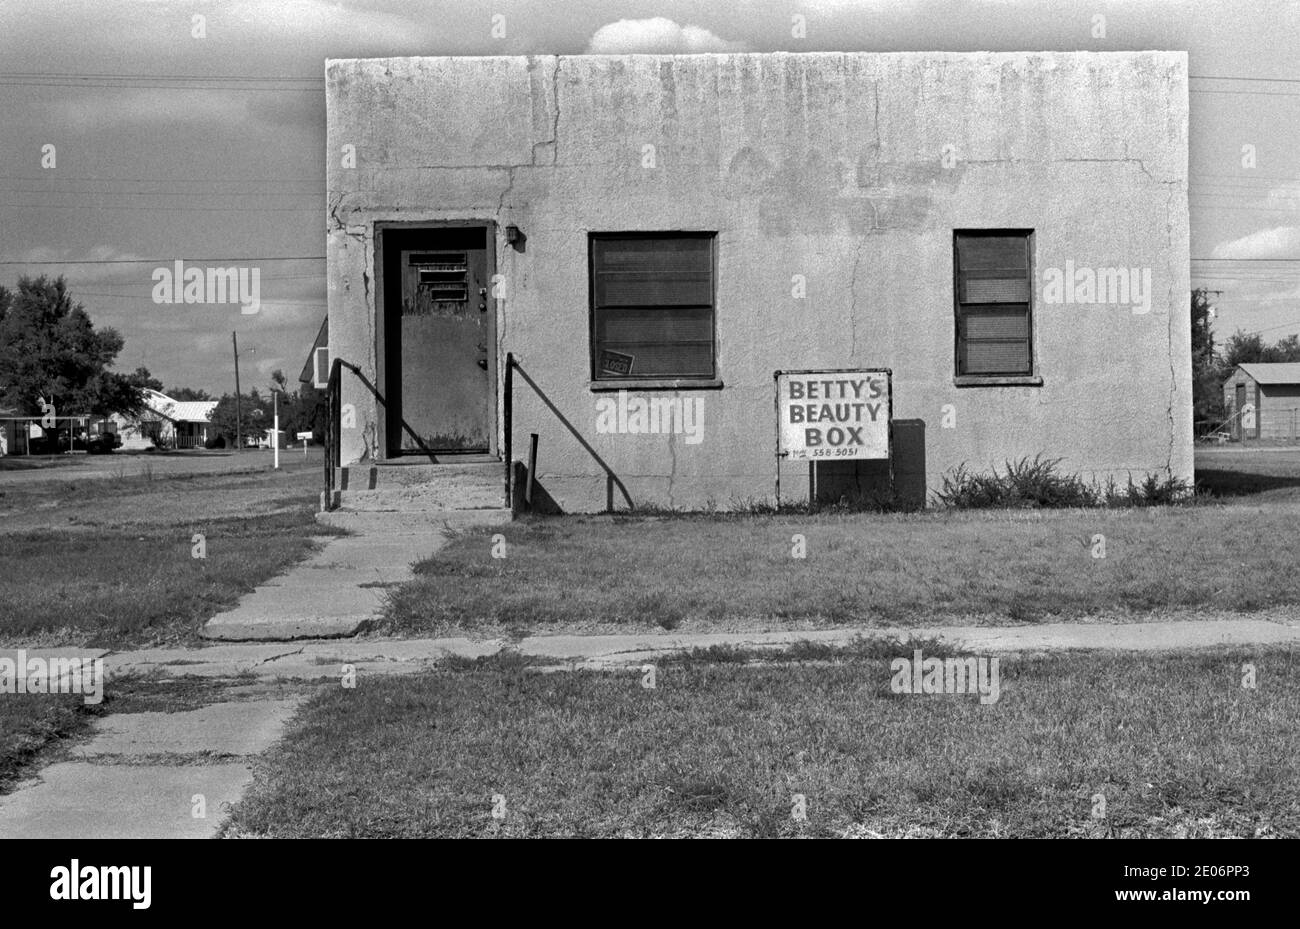 Beauty parlour building, called Bettys Beauty Box, small town America. Happy, Texas 1990s 1999 USA HOMER SYKES Stock Photo